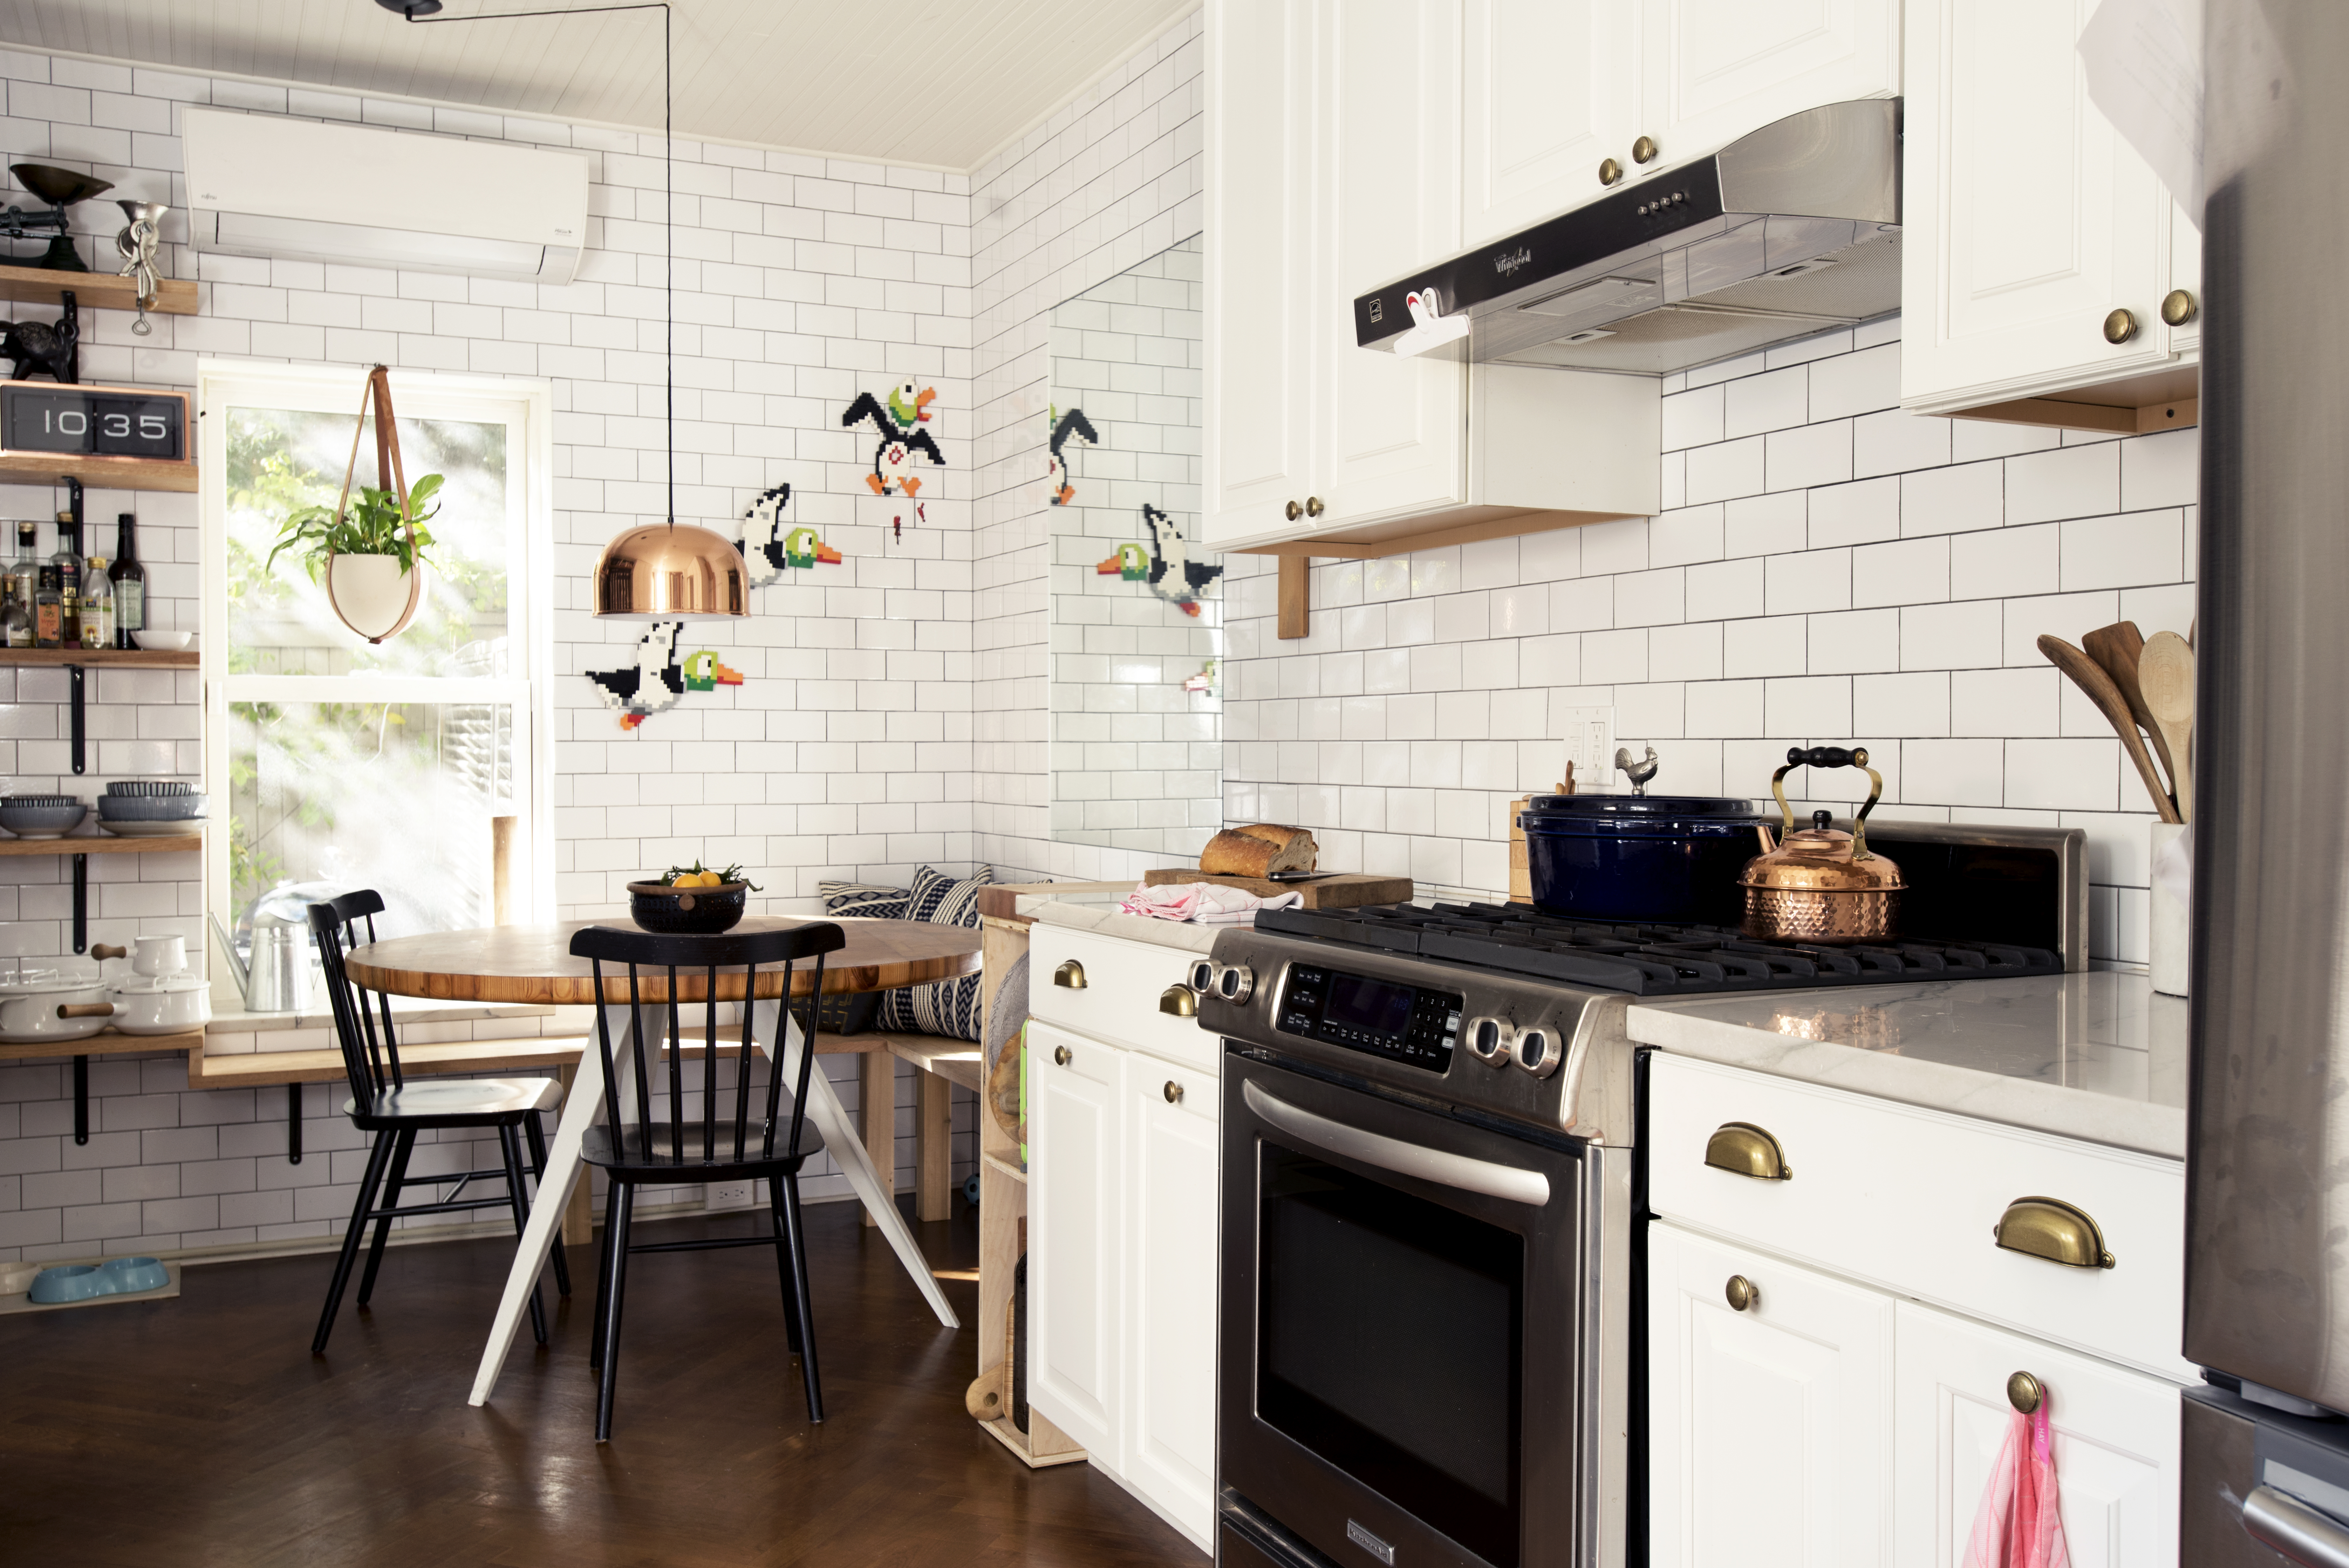 20 Beautiful White Kitchen Ideas   Design & Decorating Tips ...